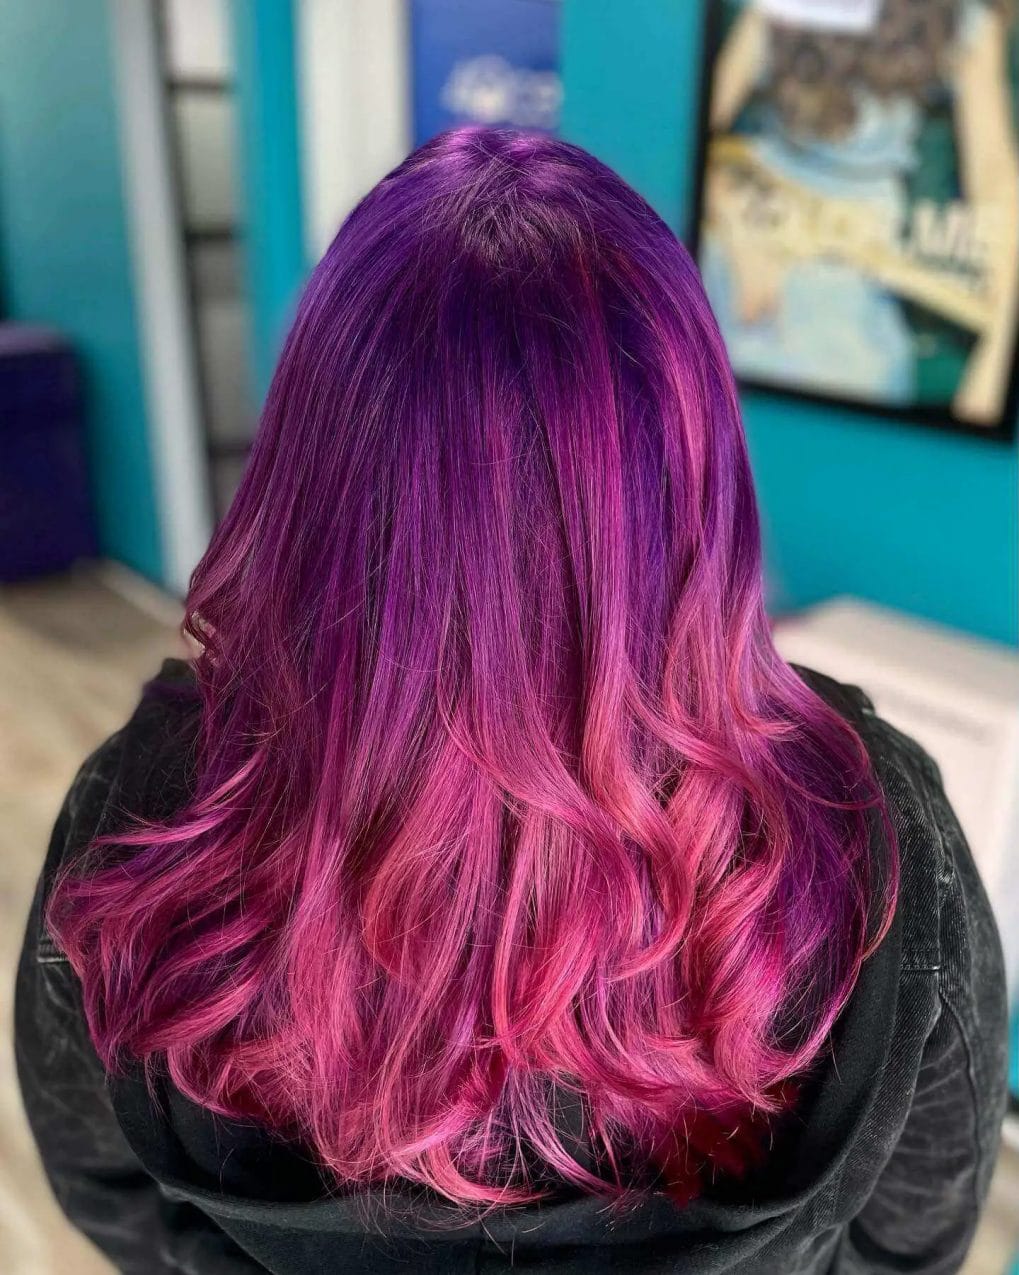 Royal purple to vibrant magenta long layered curls.